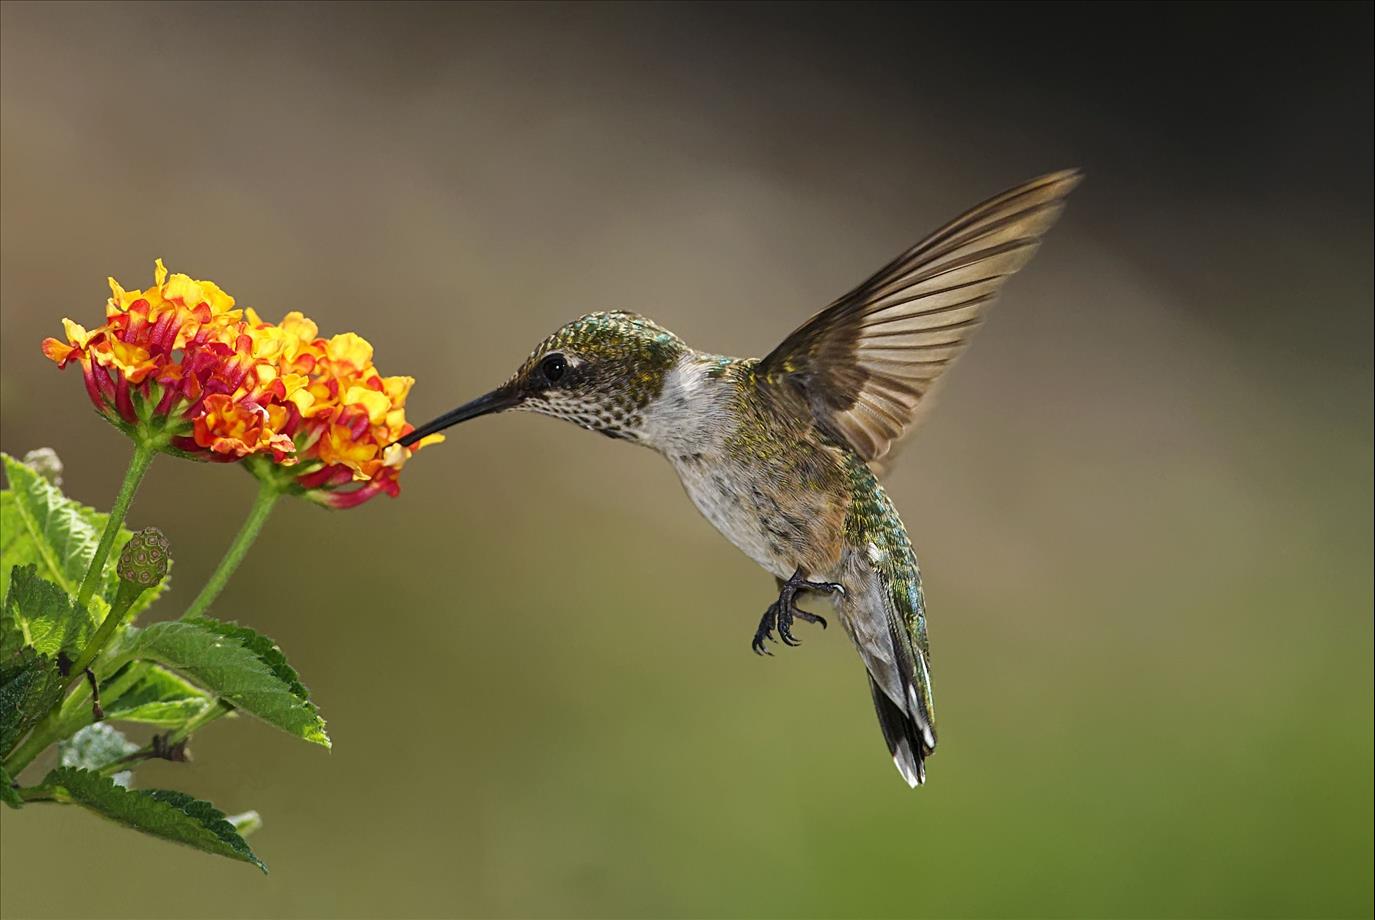 Hummingbird to be declared Costa Rica’s national symbol